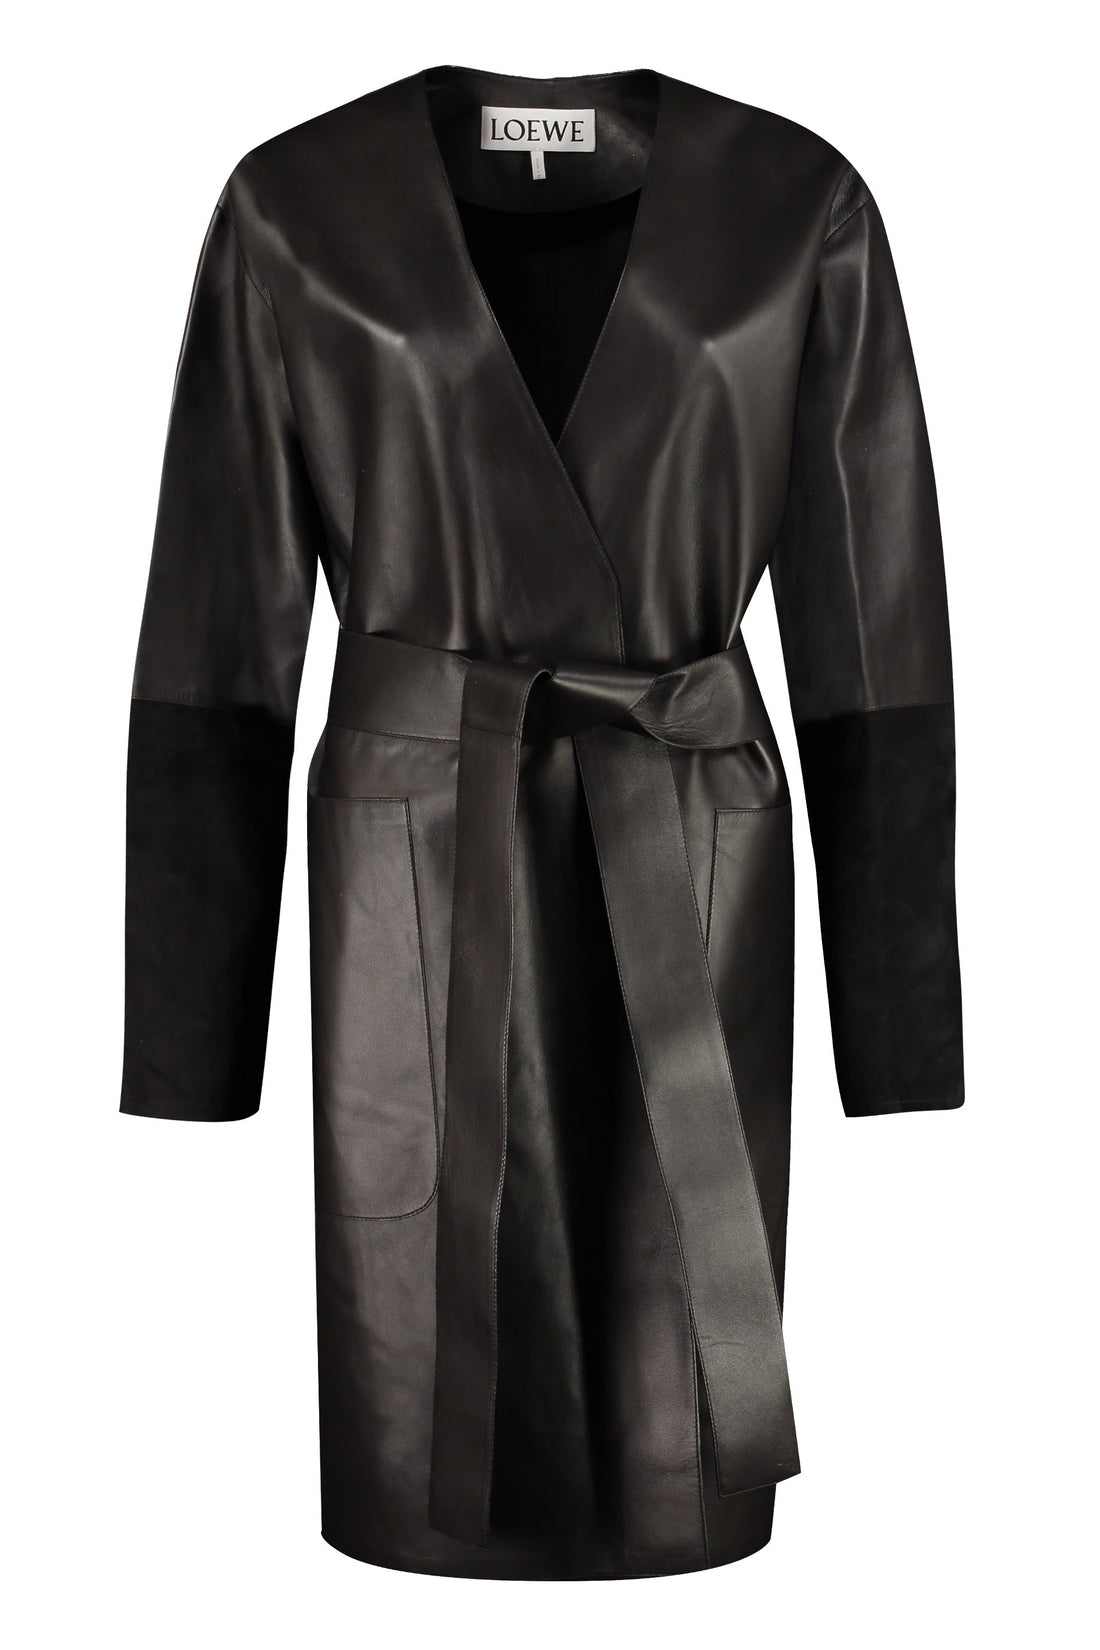 Loewe-OUTLET-SALE-Belted leather jacket-ARCHIVIST